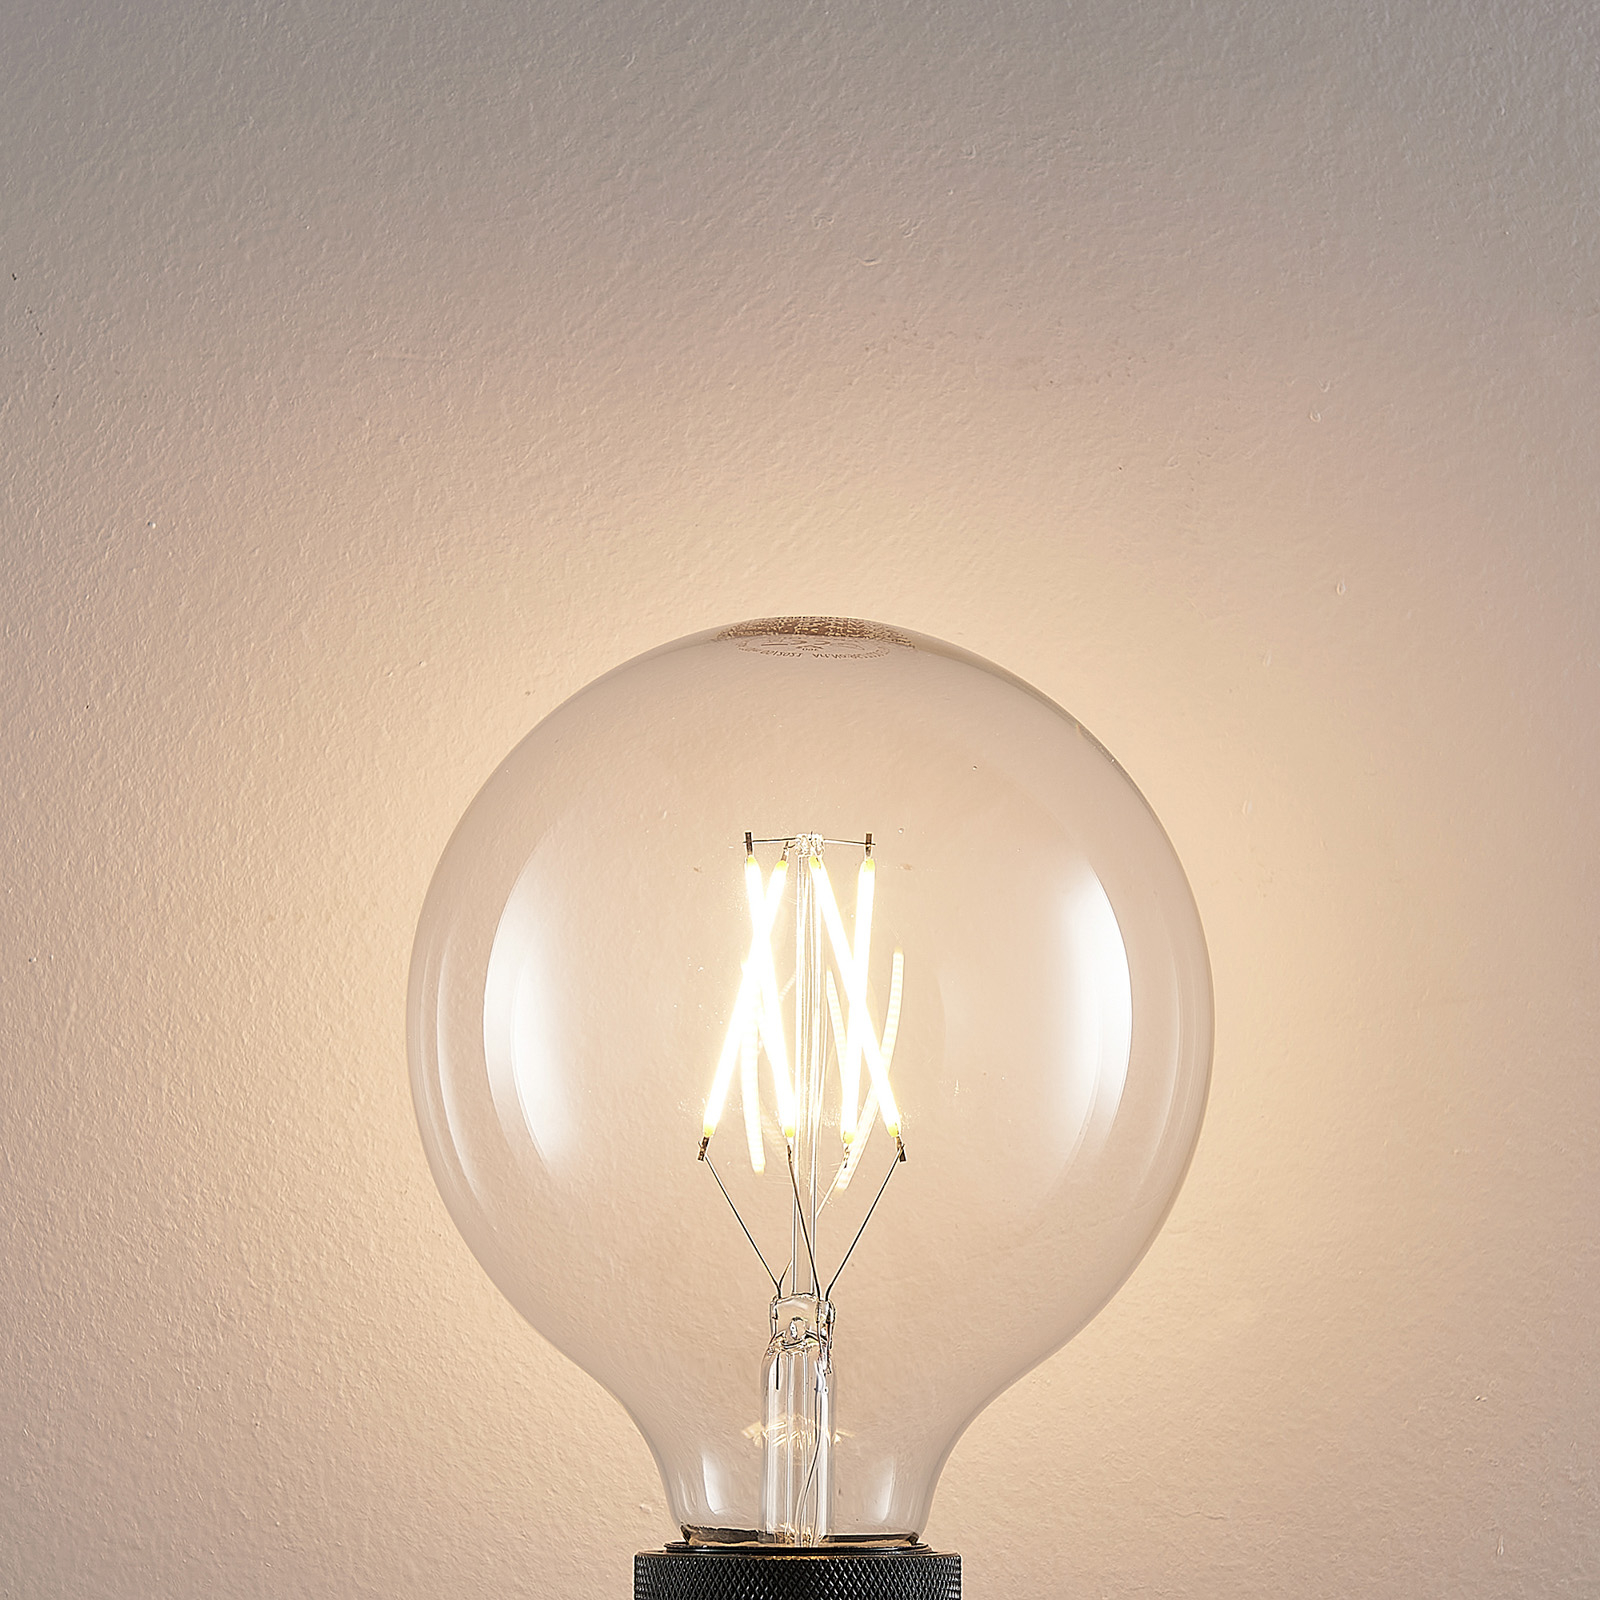 LED lamp E27 6W 2.700K G125 bollamp filament